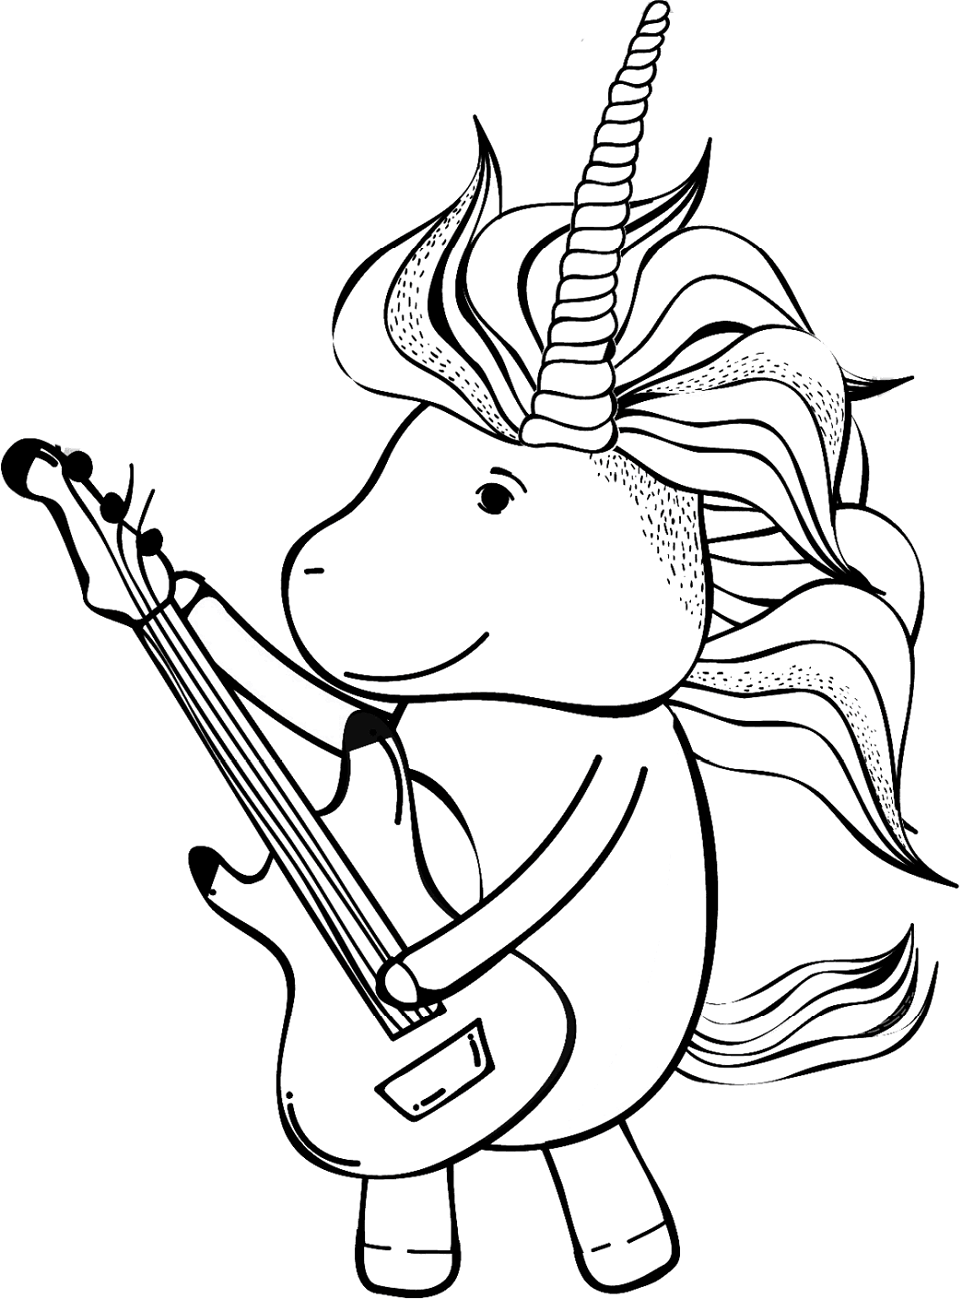 Unicorn Playing Guitar